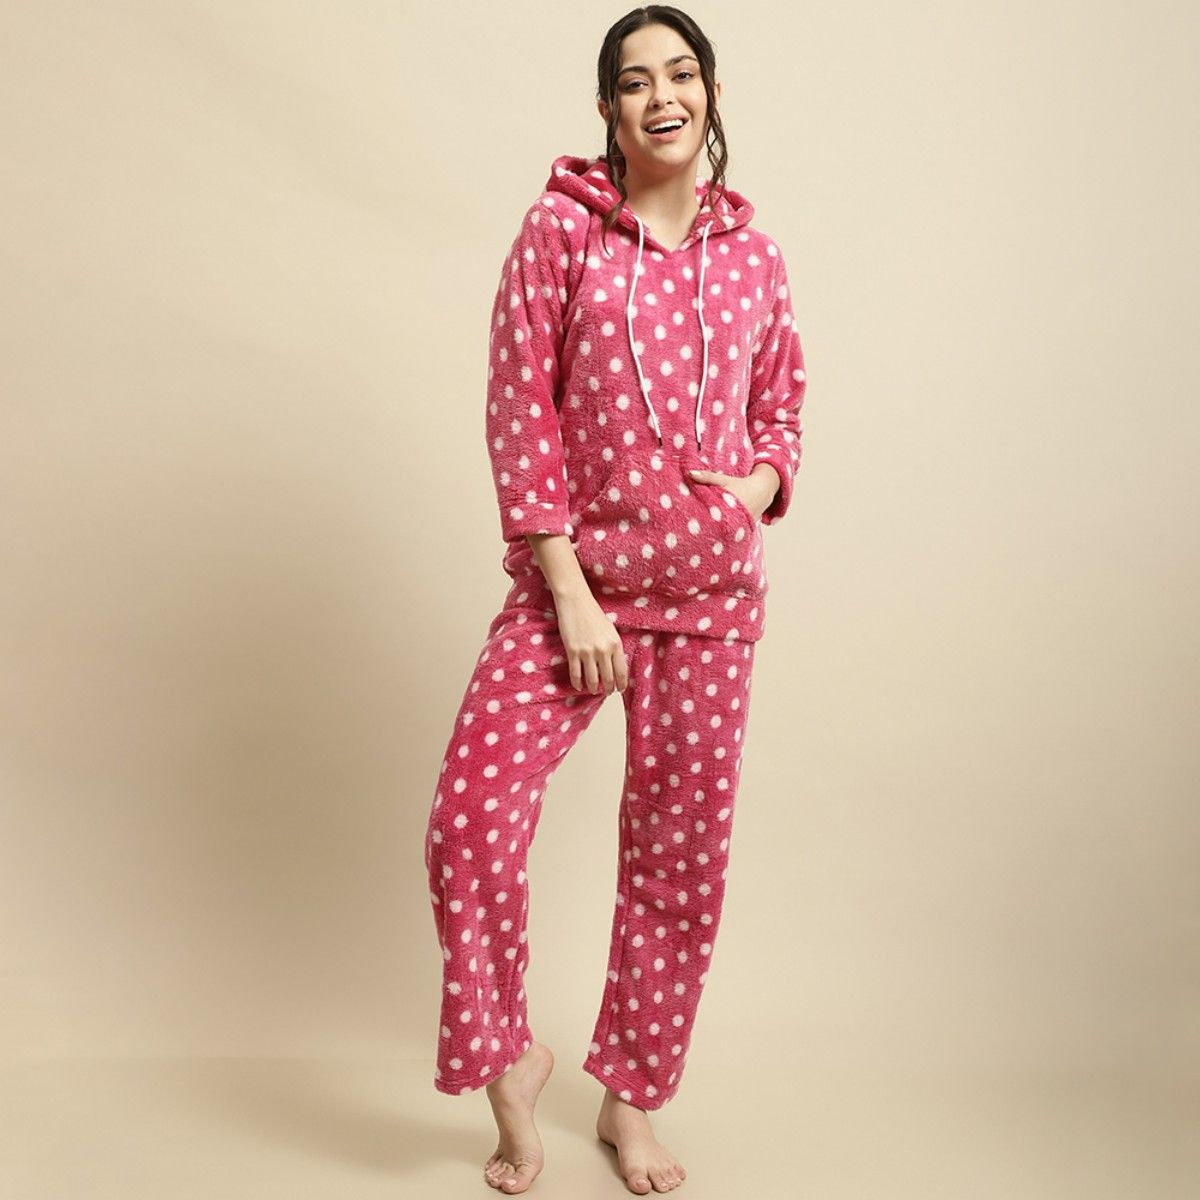 Buy MUKHAKSH Women's Fleece Striped Top and Bottom Pyjama Set (Women Simple  Pink Peach Night Suit, Pink, Peach, Free Size) at Amazon.in